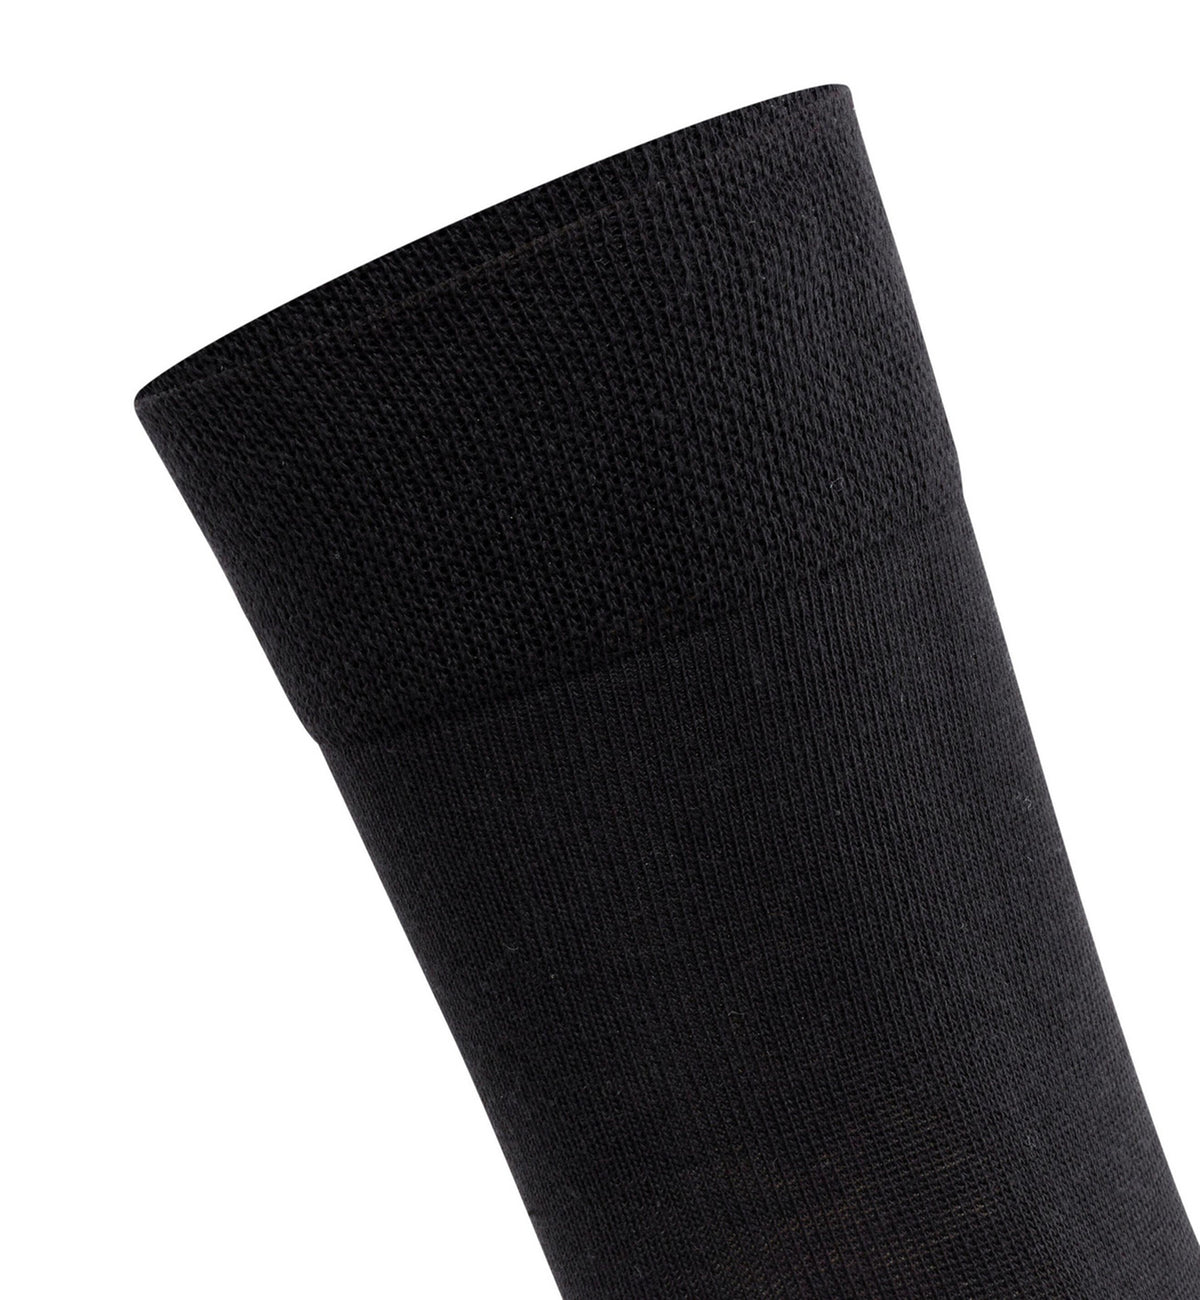 FALKE Sensitive London Crew Socks (46472),5/7.5,Black - Black,5/7.5